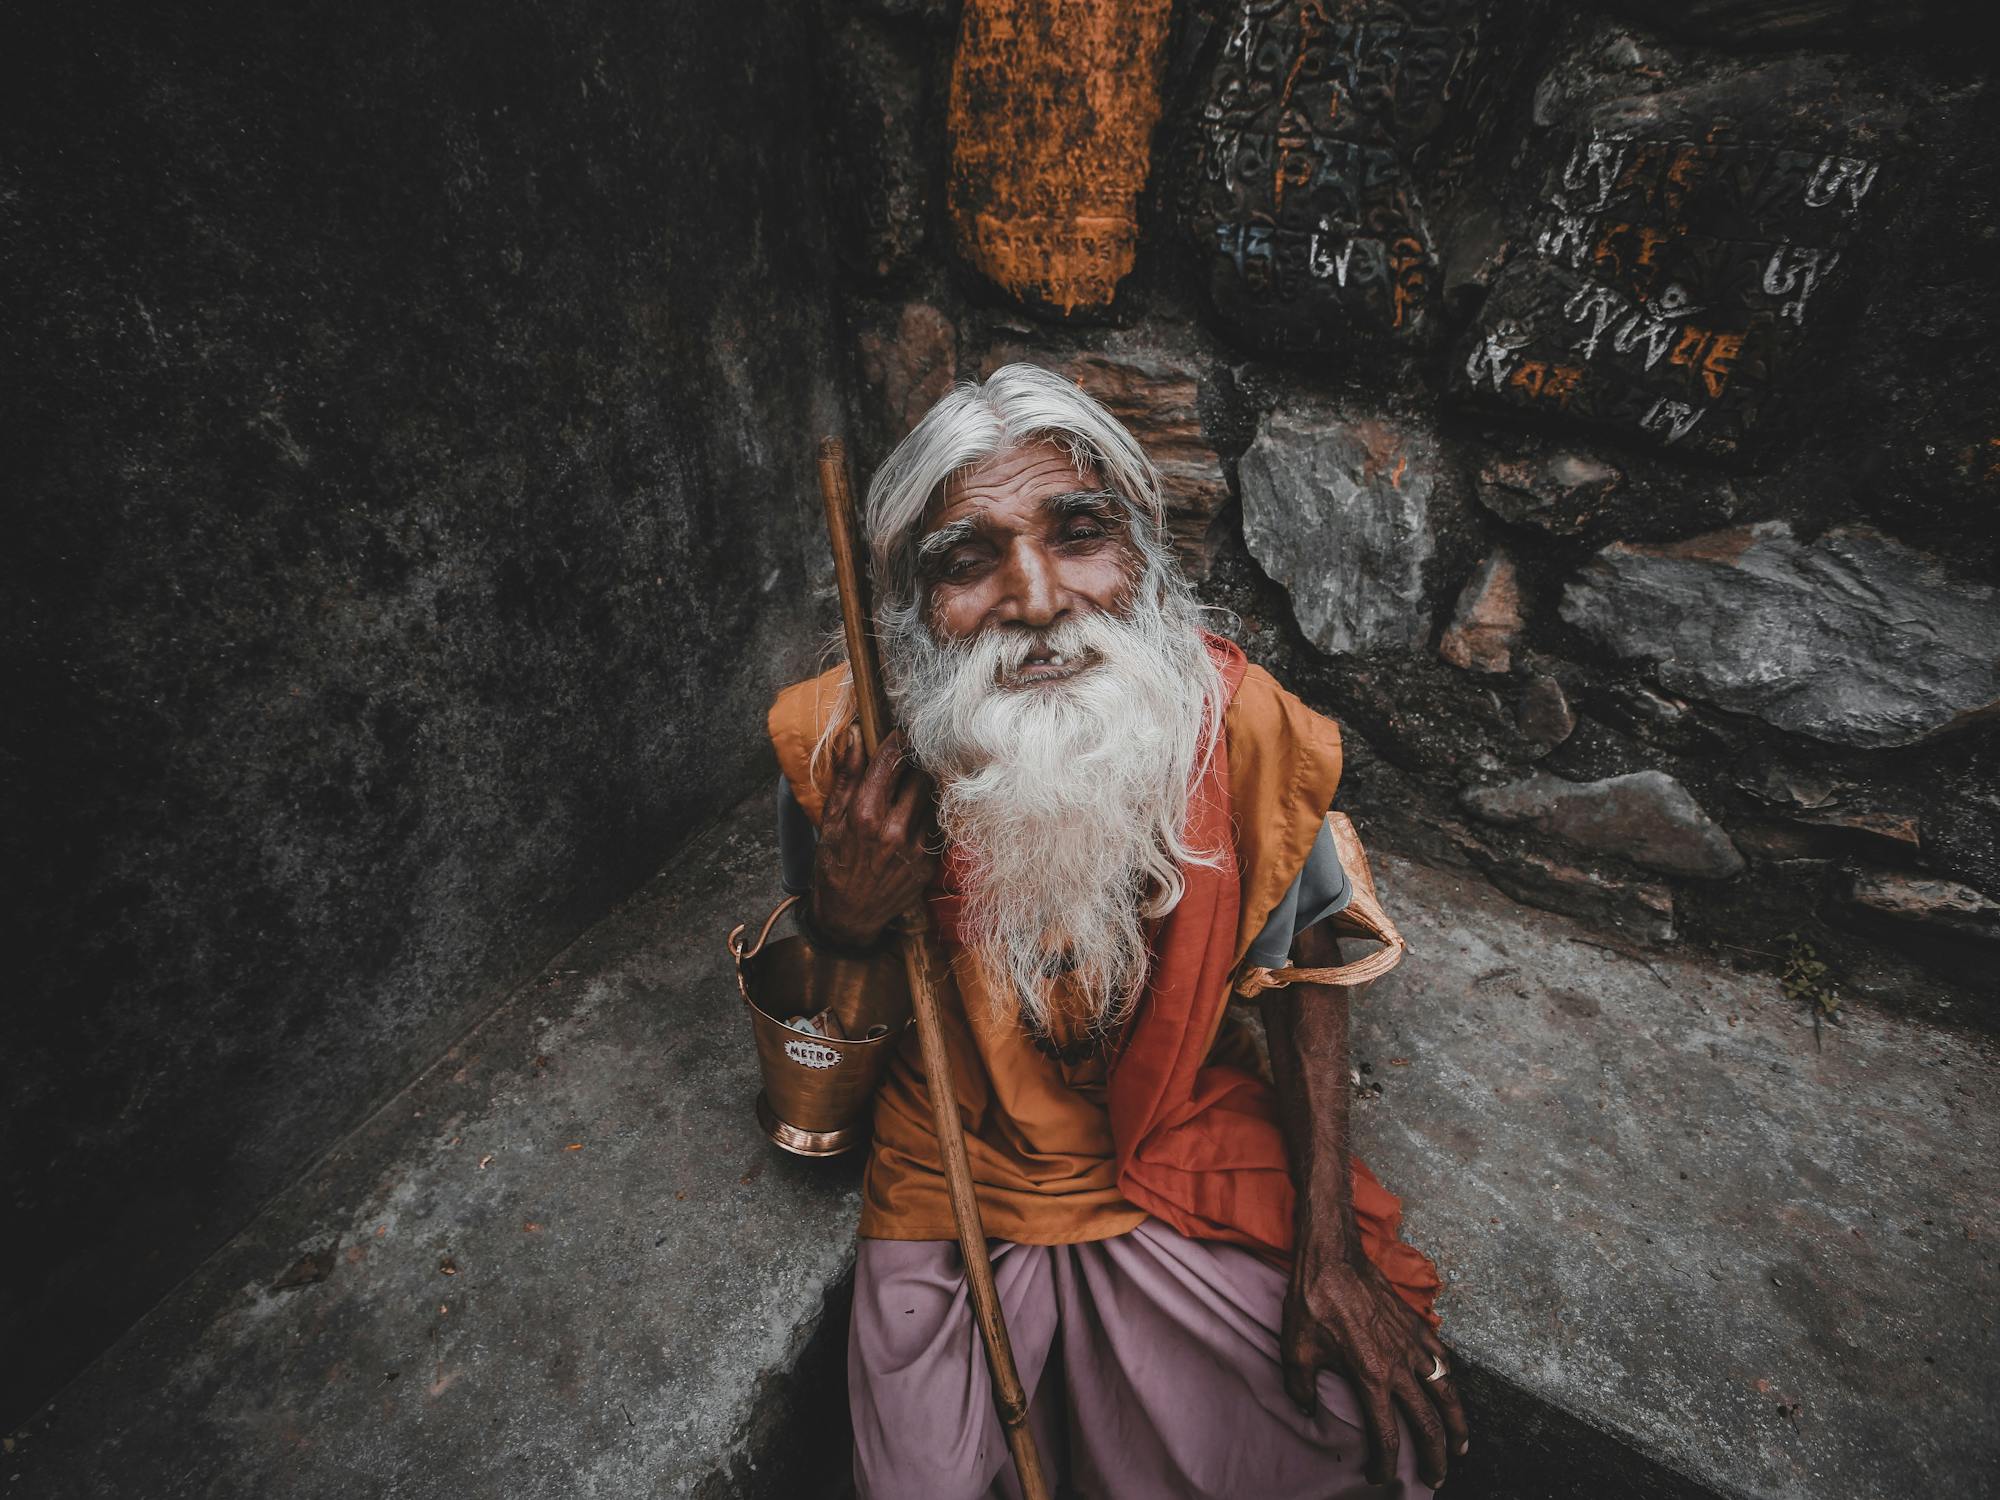 Hindu Saint Photo by Mehmet Turgut  Kirkgoz  from Pexels: https://www.pexels.com/photo/elderly-man-holding-a-stick-6235790/